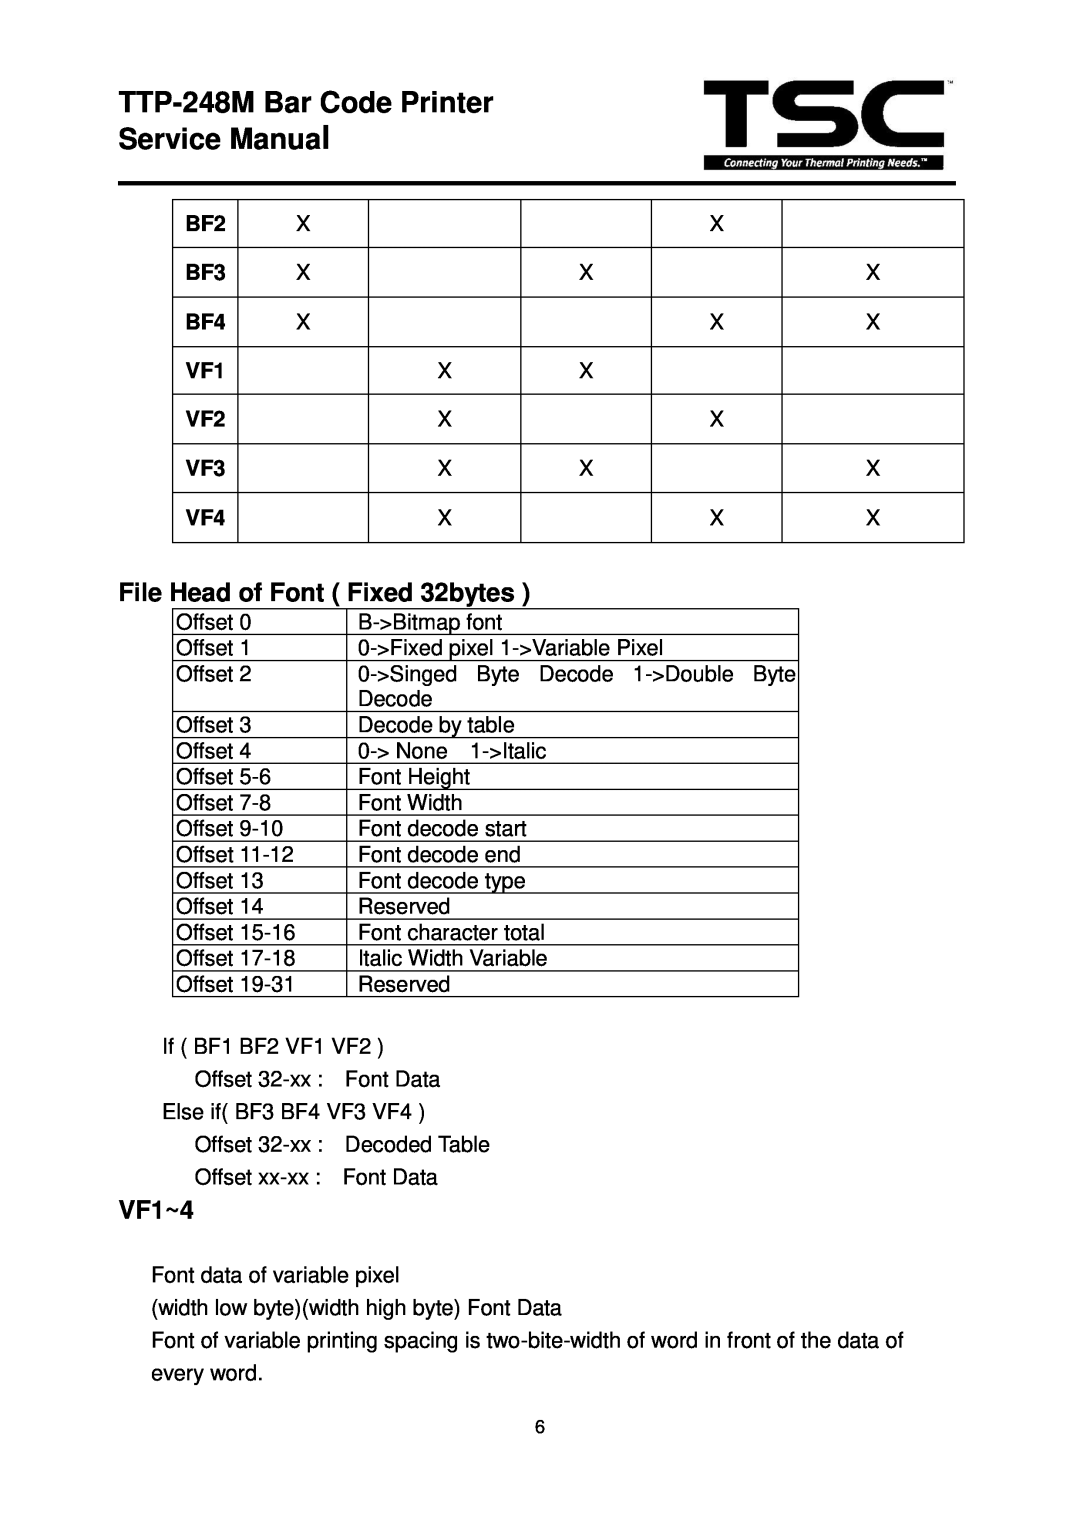 The Speaker Company TTP 248M File Head of Font Fixed 32bytes, VF1~4, TTP-248M Bar Code Printer Service Manual 